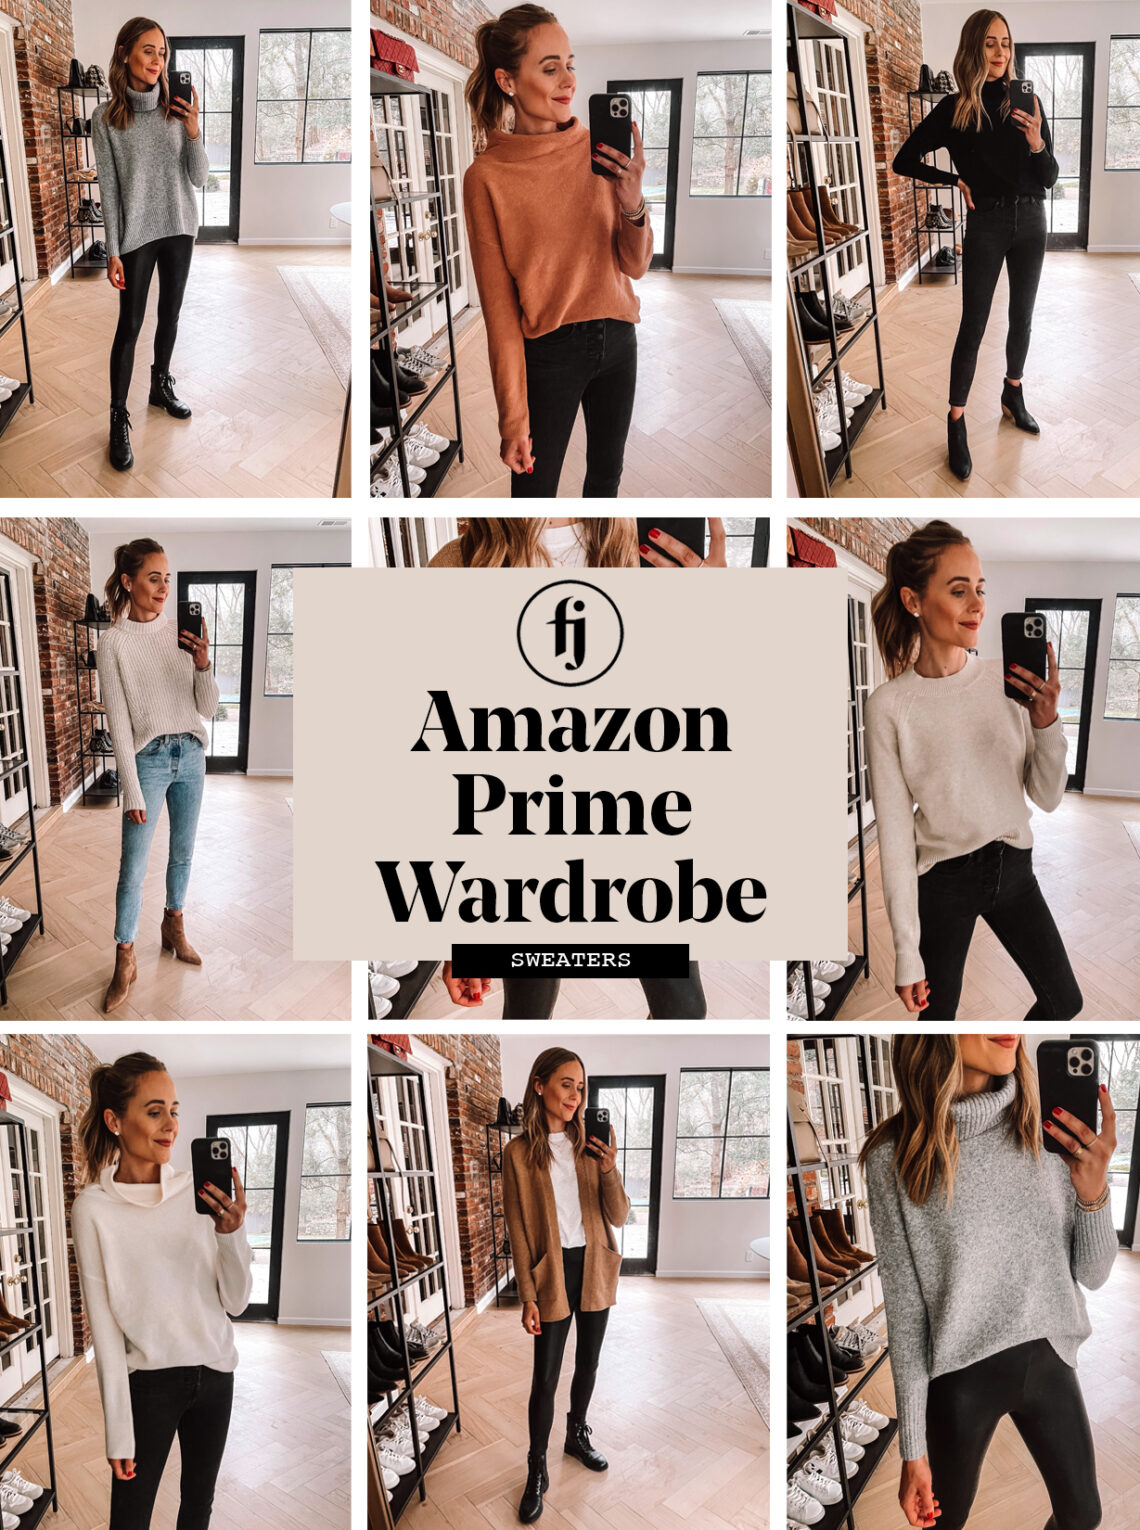 Amazon Prime Wardrobe Sweaters Haul